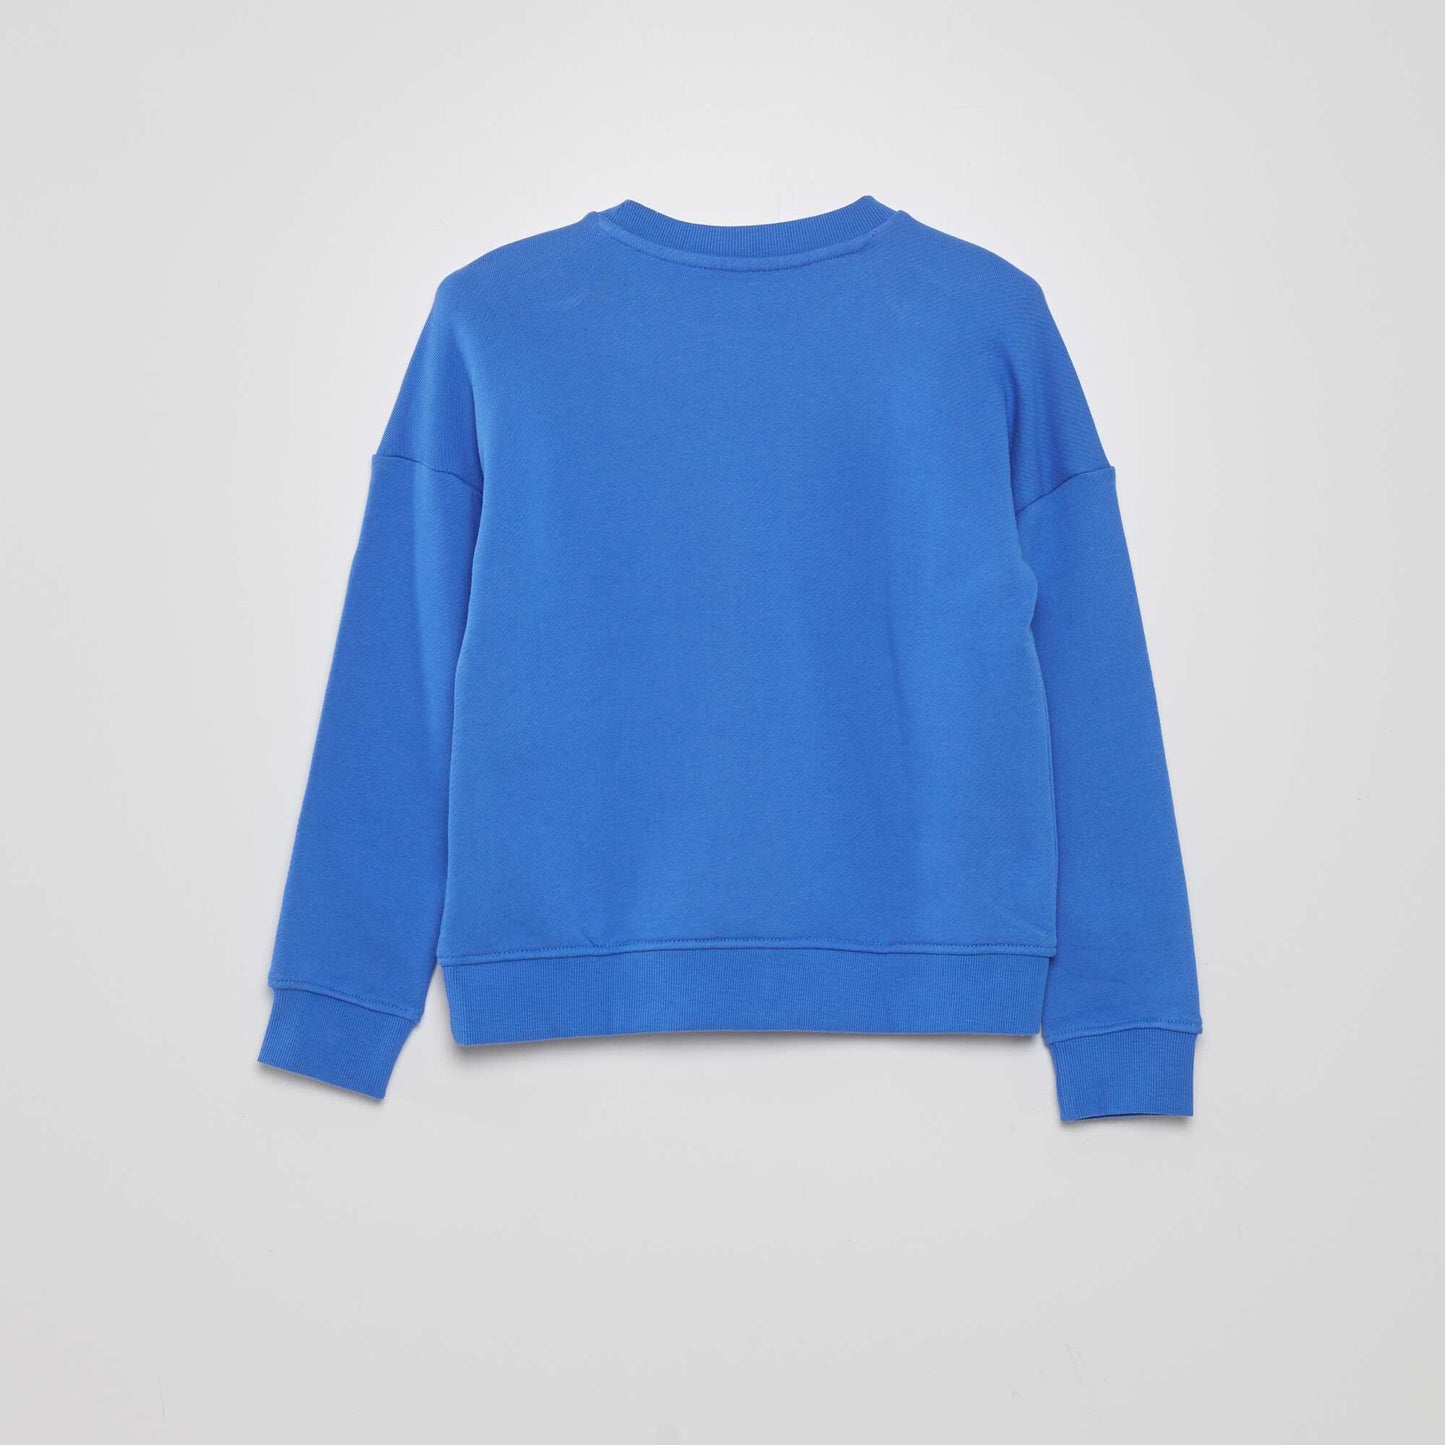 Lightweight sweatshirt fabric sweater BLUE